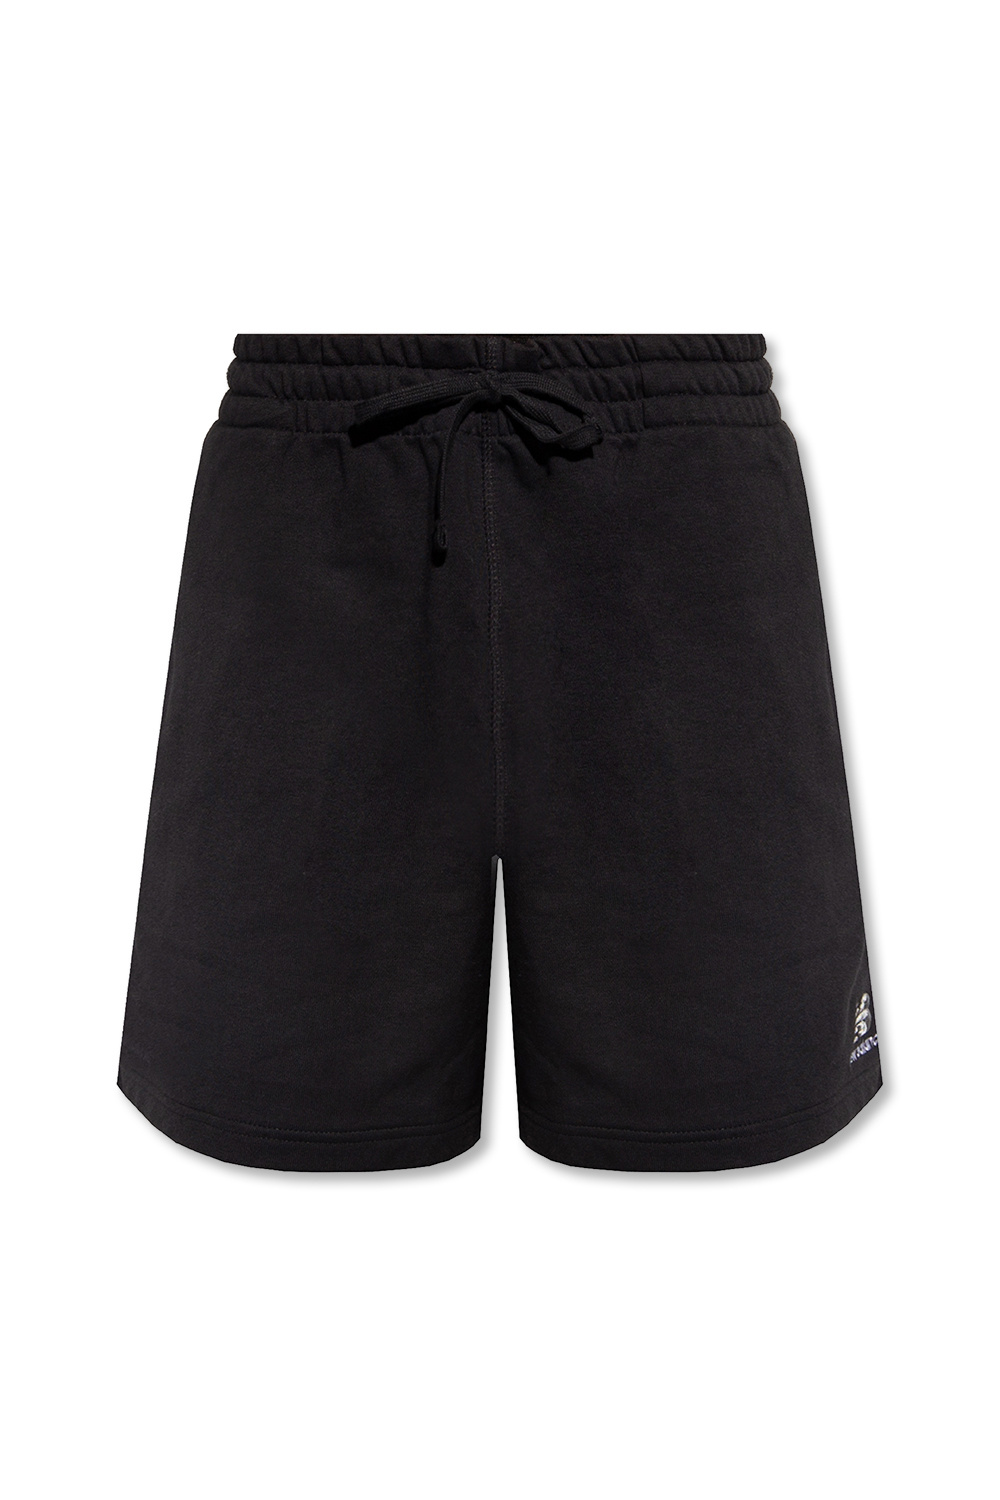 New Balance Sweat shorts with logo